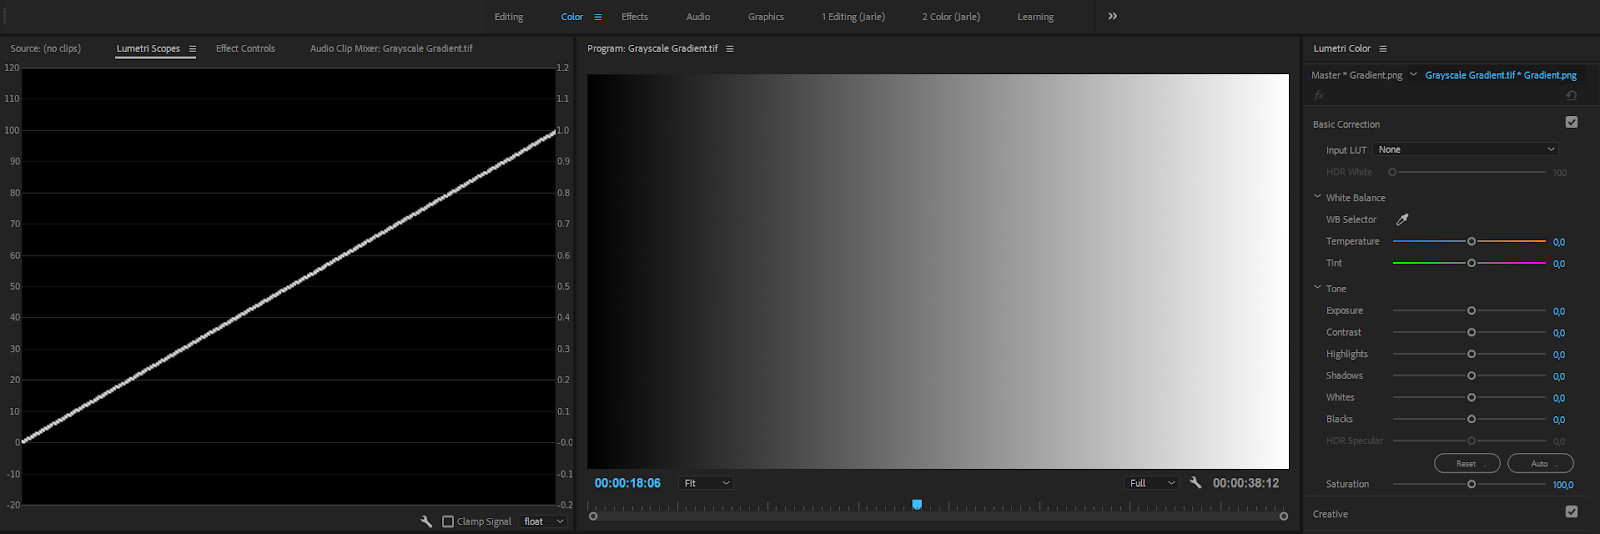 Premiere Color Correction: linear gradient before adjustment